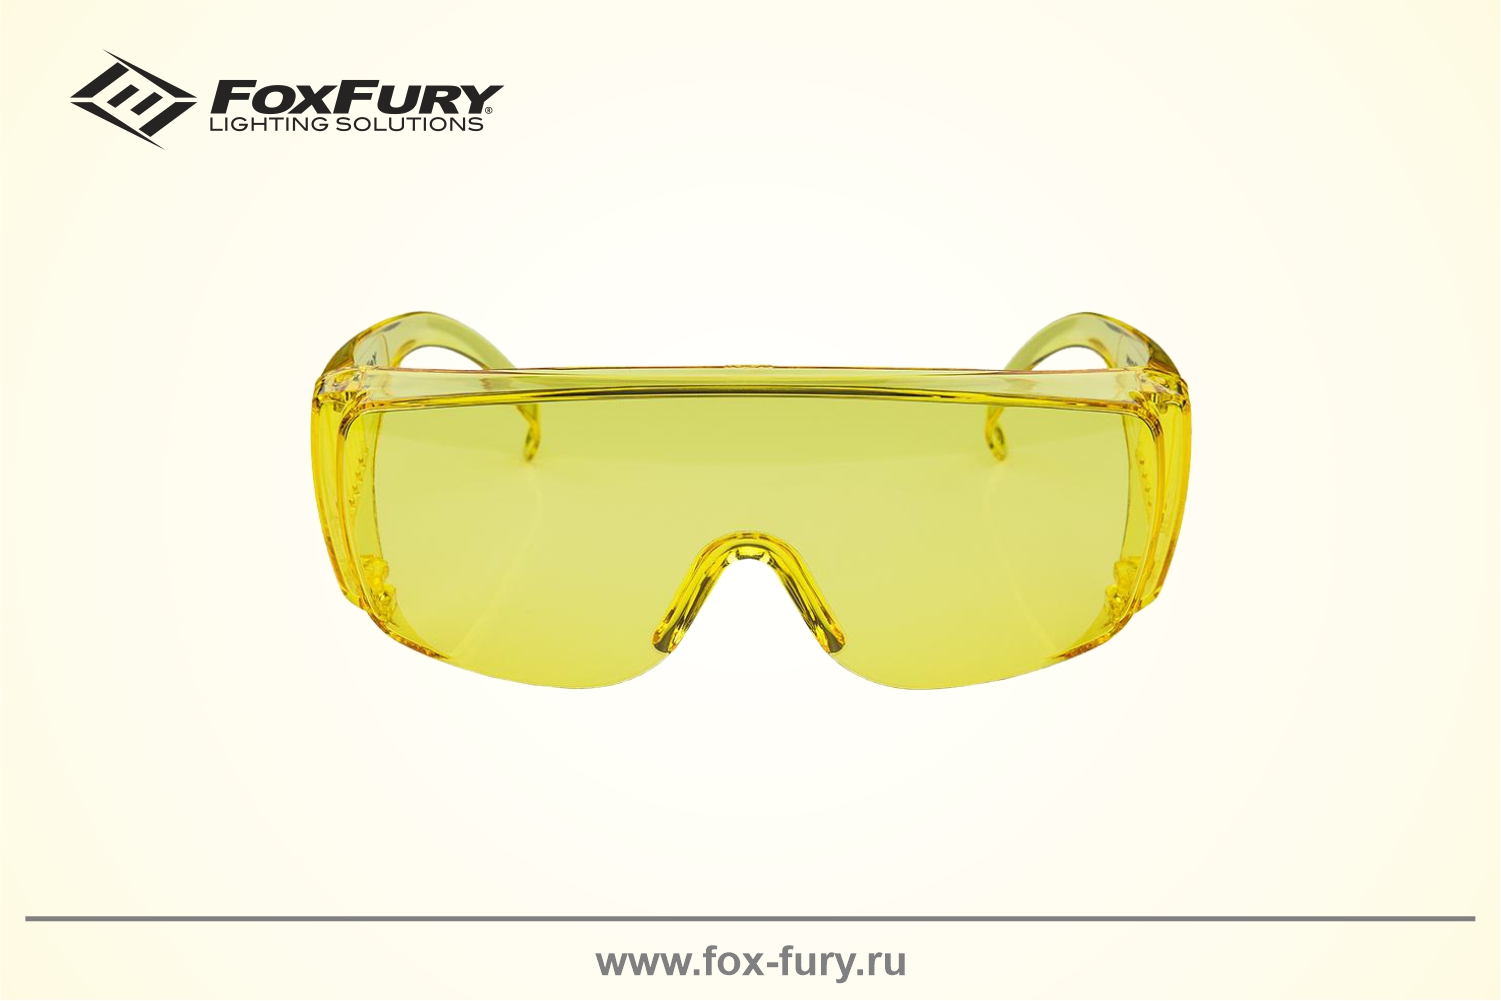 Очки для криминалистики FoxFury желтые 601-1020